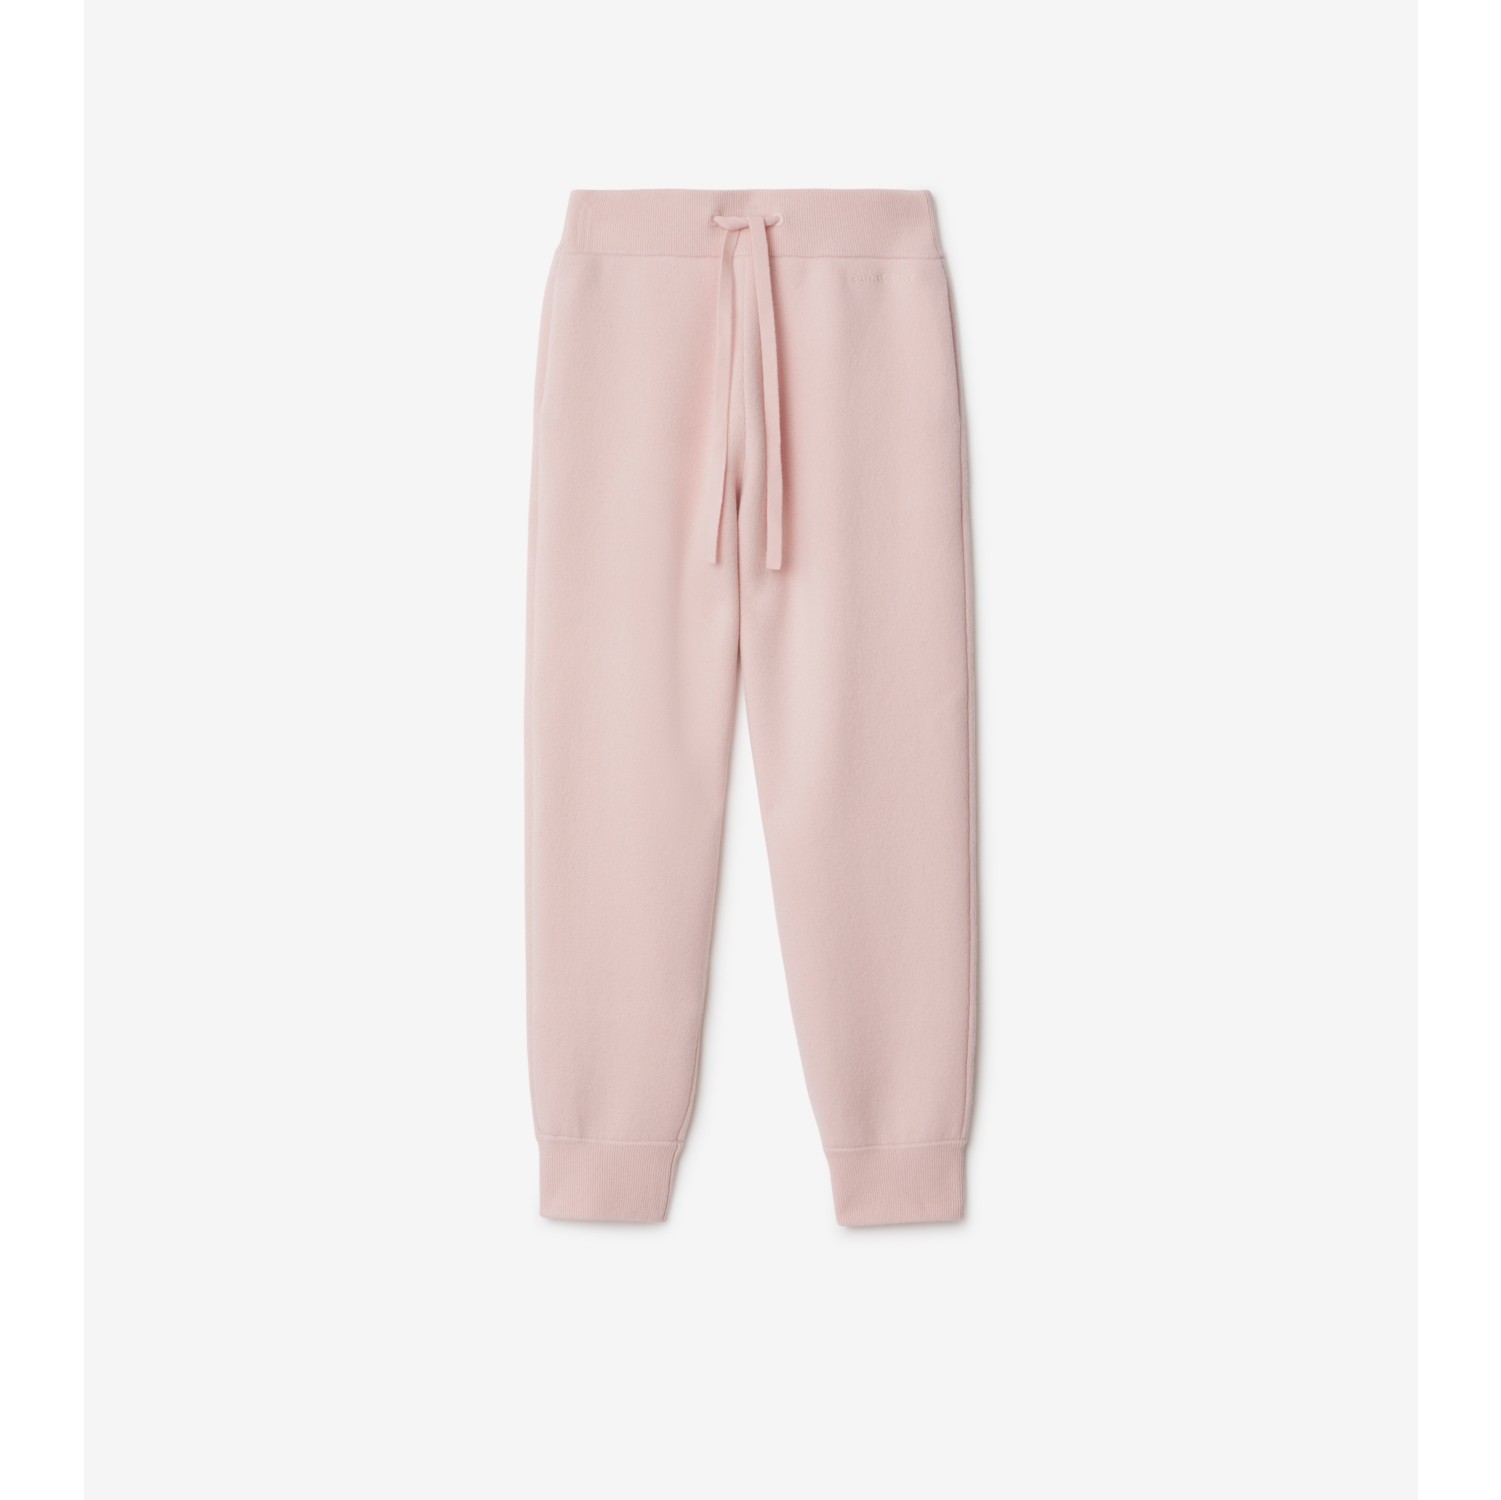 Cashmere Blend Jogging Pants in Soft Pink - Women